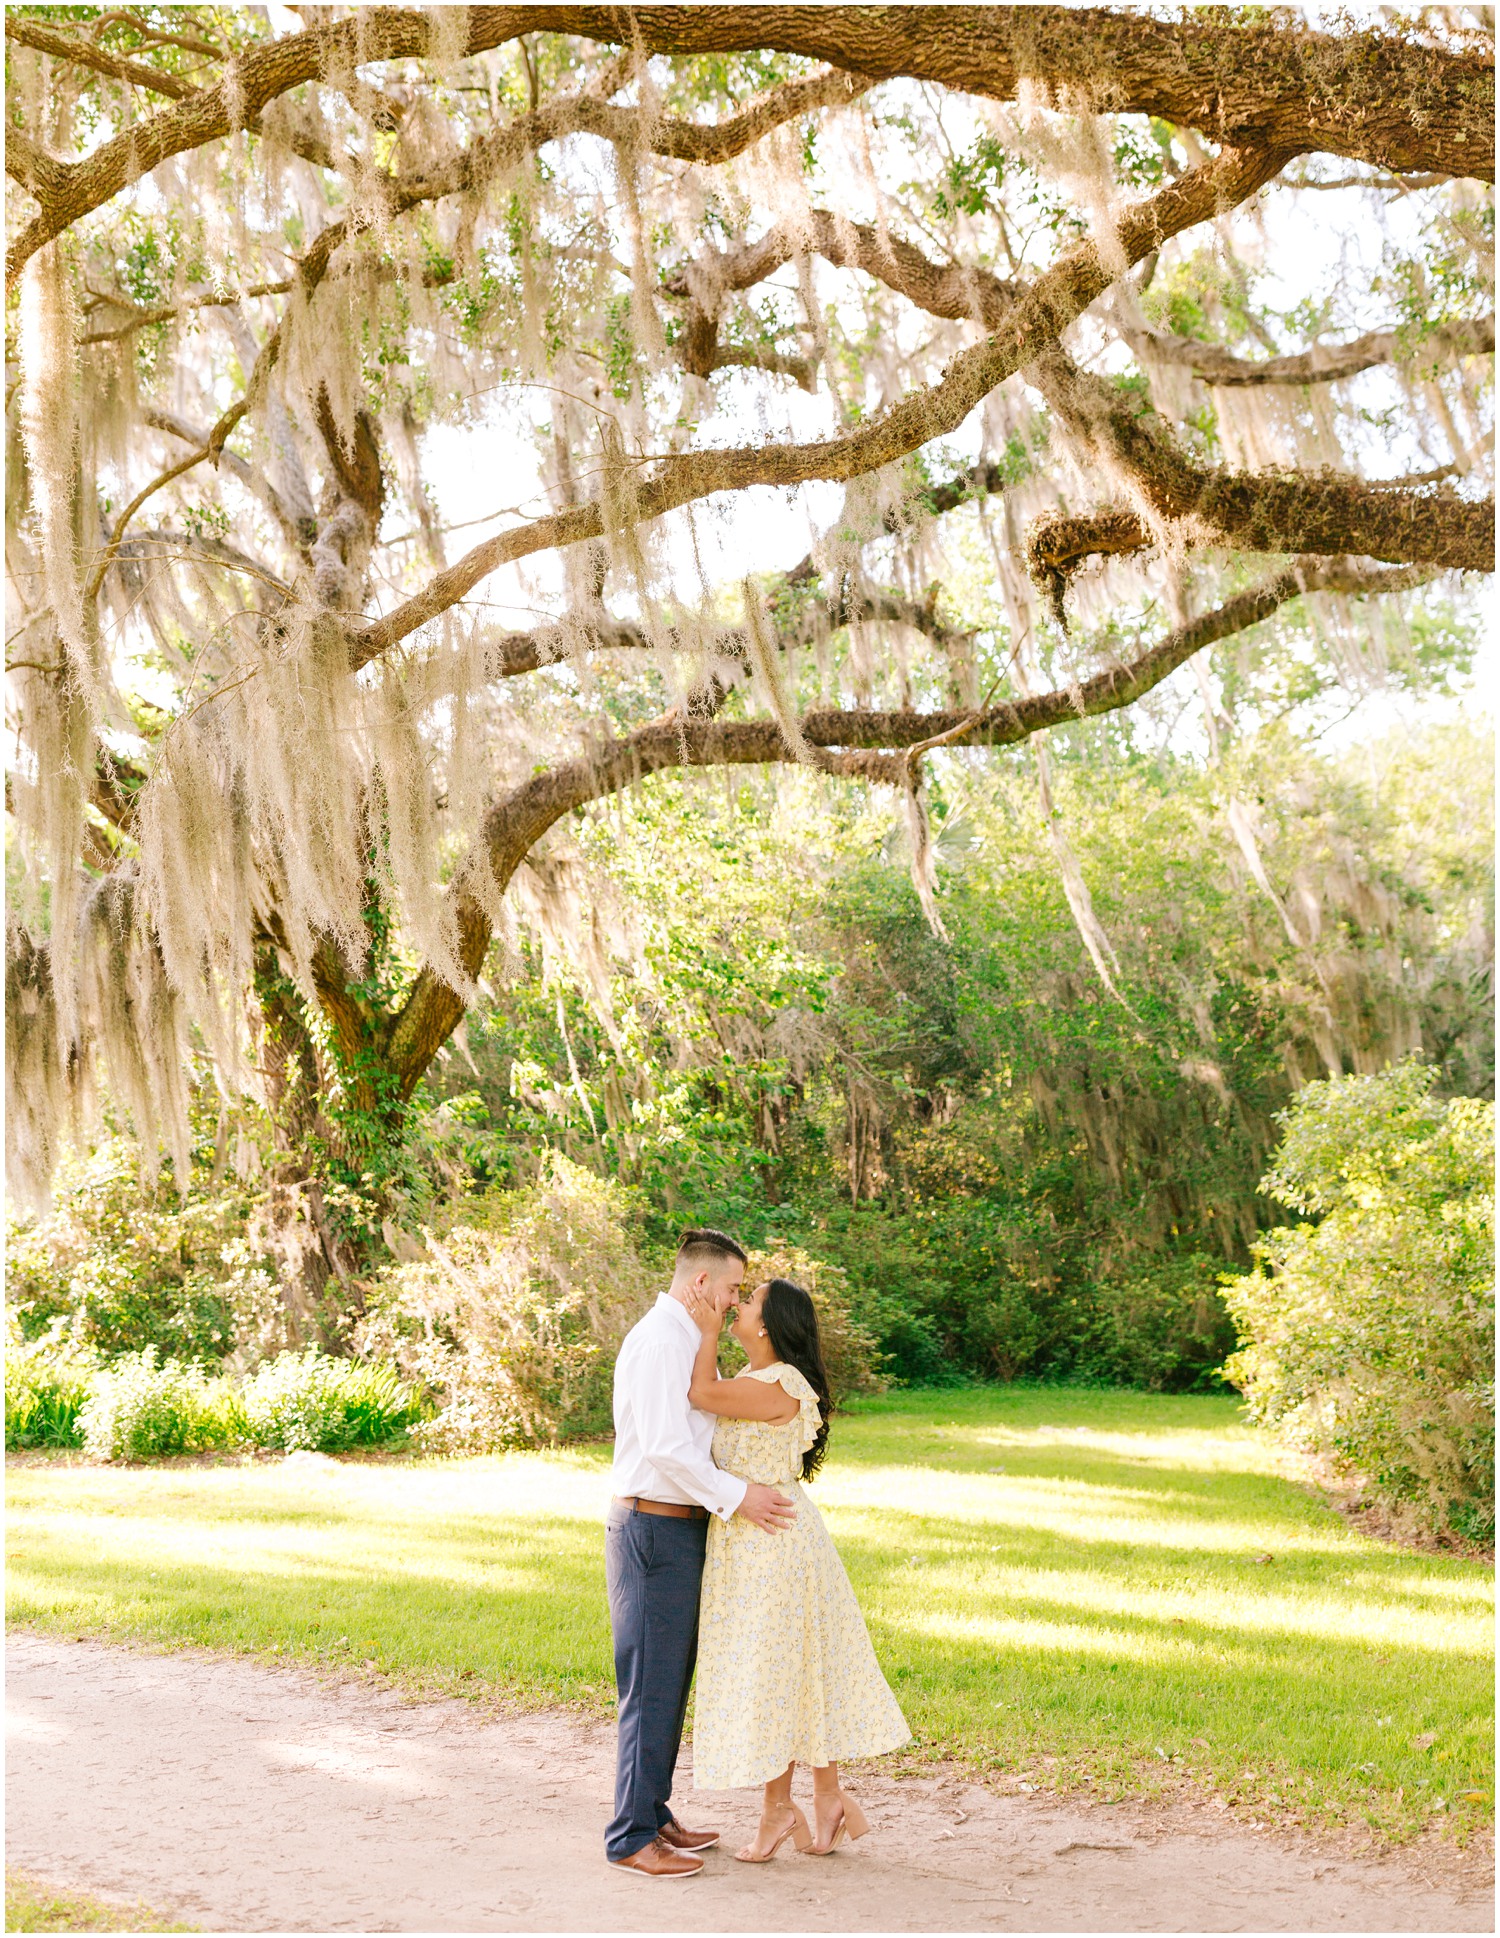 Destination-Wedding-Photographer_Magnolia-Plantation-Engagement-Session_Jess-and-Justin_Charleston-South-Carolina_0015.jpg